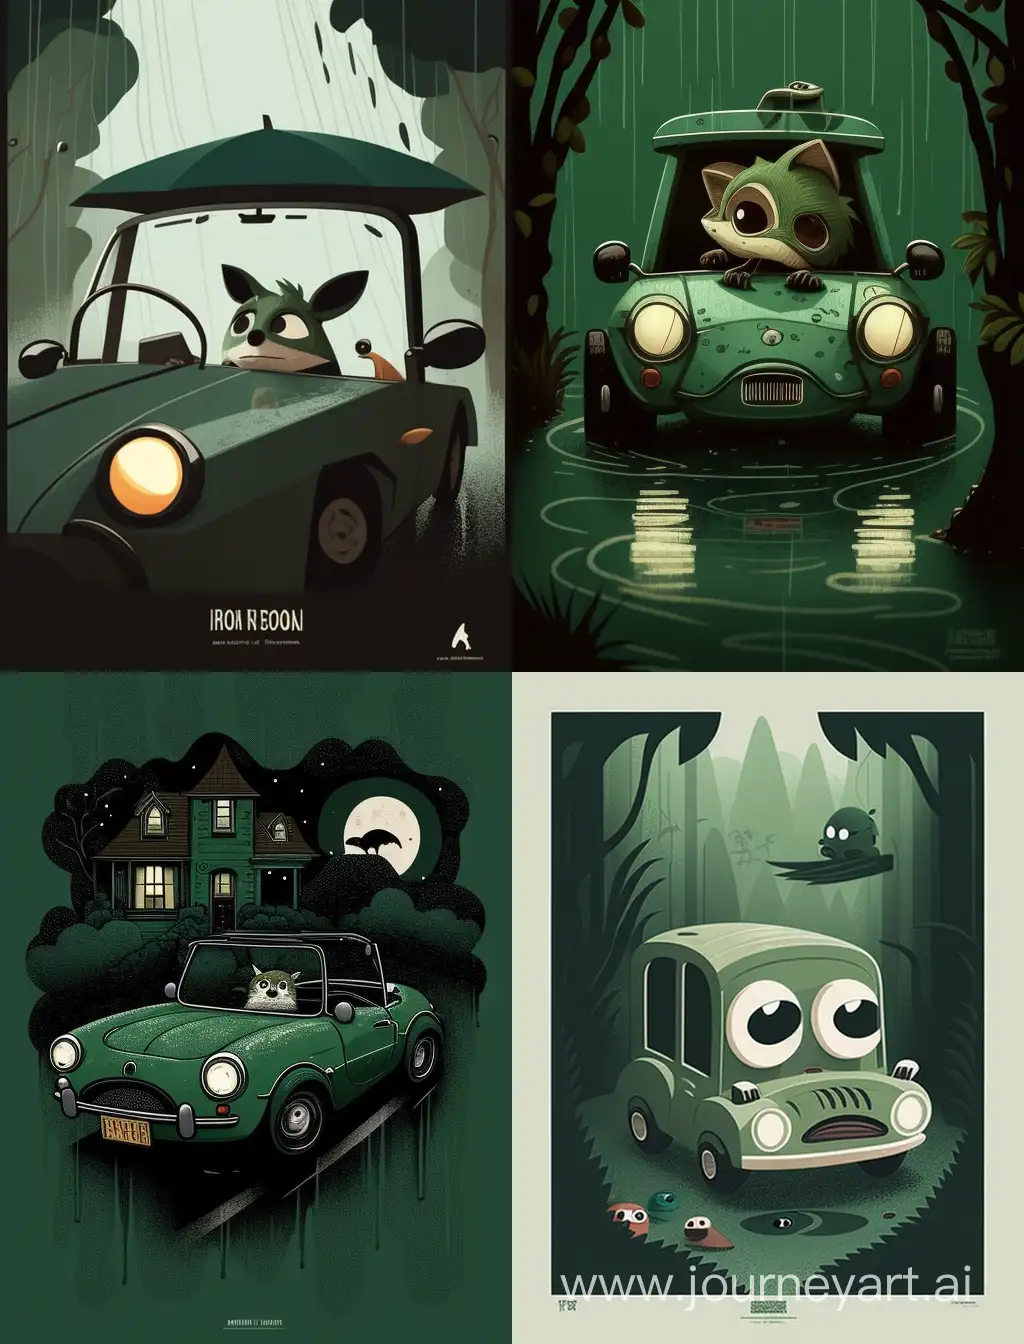 Sad raccoon driving a dark green Mazda MX-5 drawn in style of the movie "My neighbour Totoro"